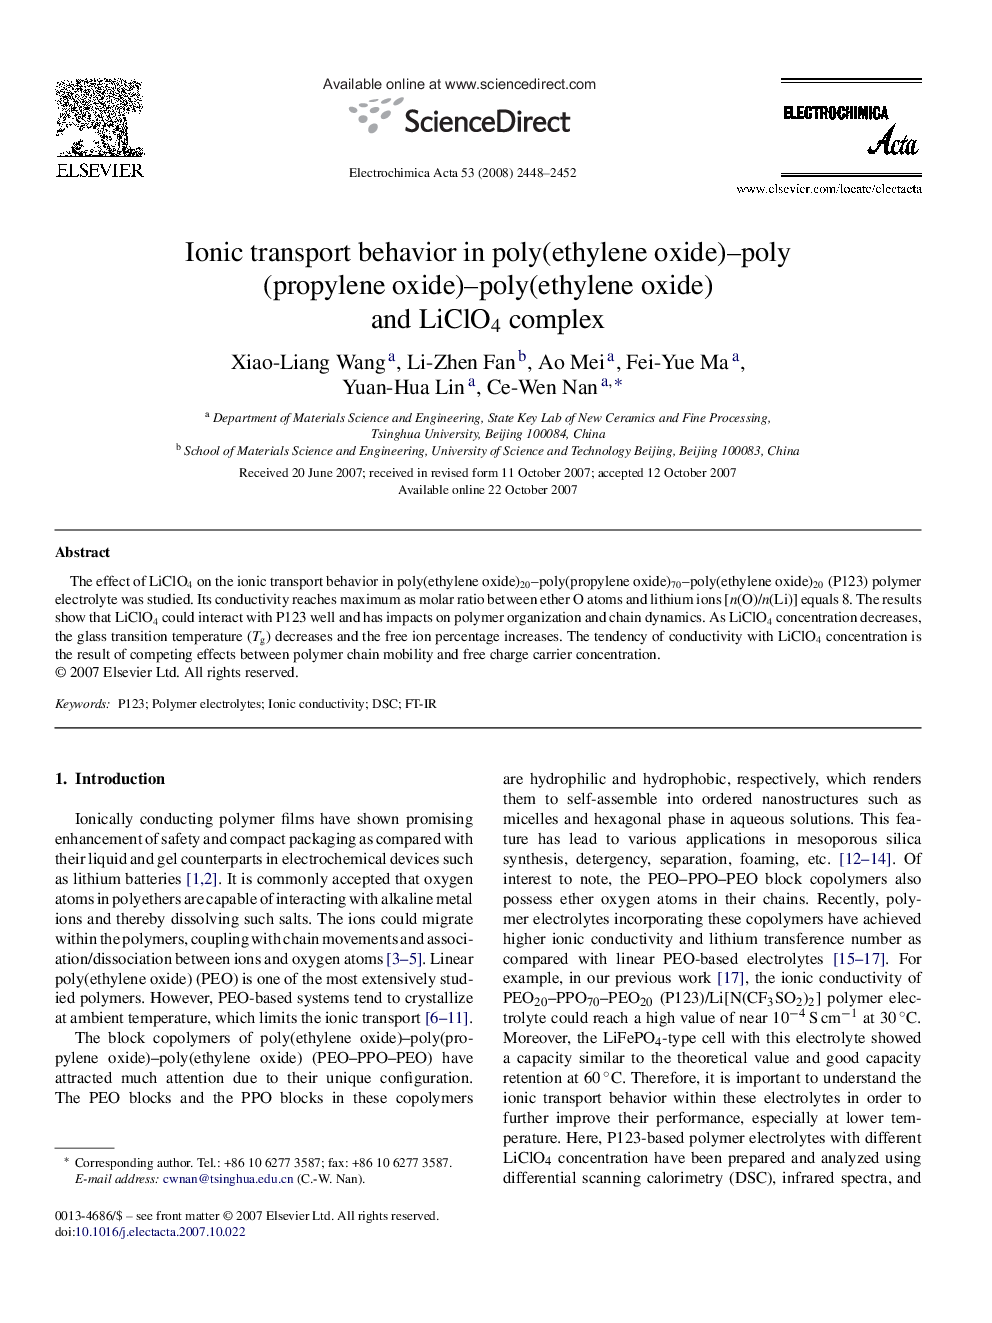 Ionic transport behavior in poly(ethylene oxide)–poly(propylene oxide)–poly(ethylene oxide) and LiClO4 complex